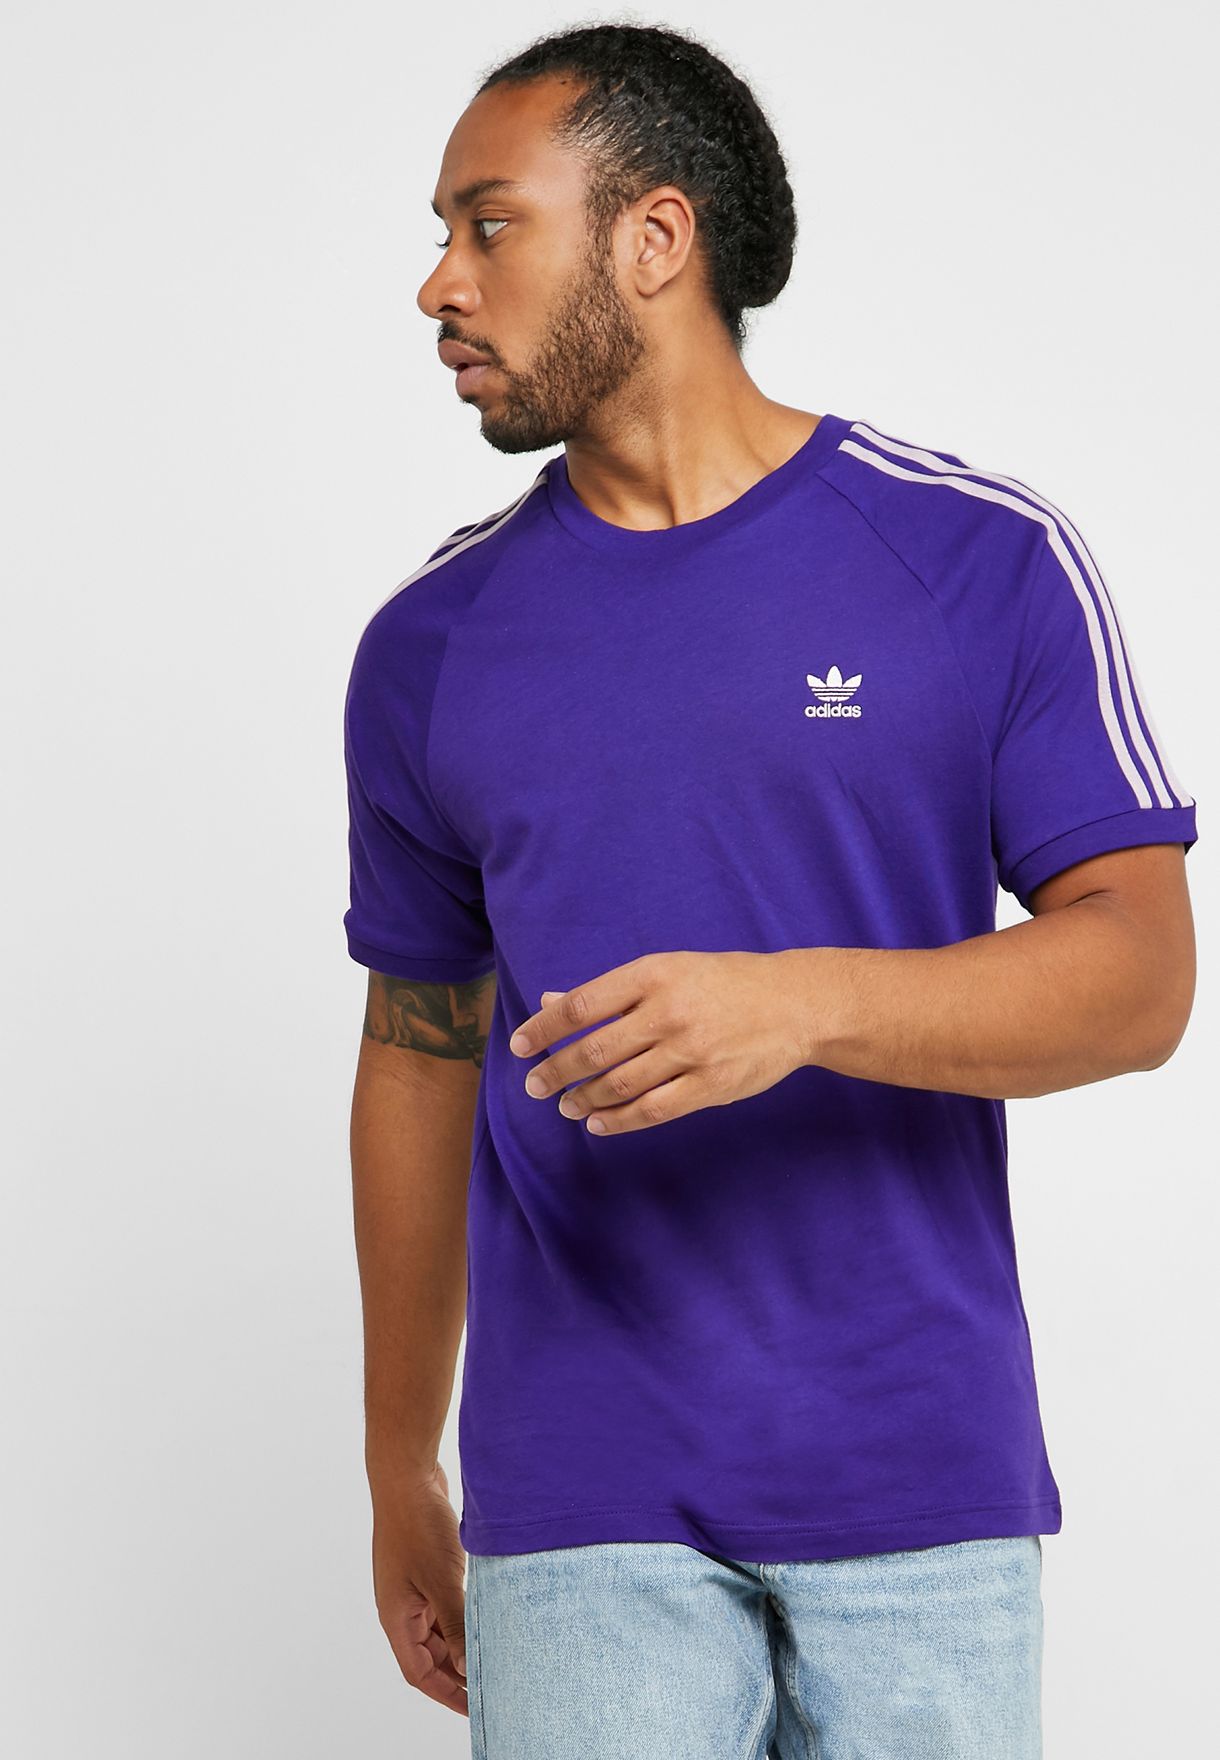 t shirt adidas violet